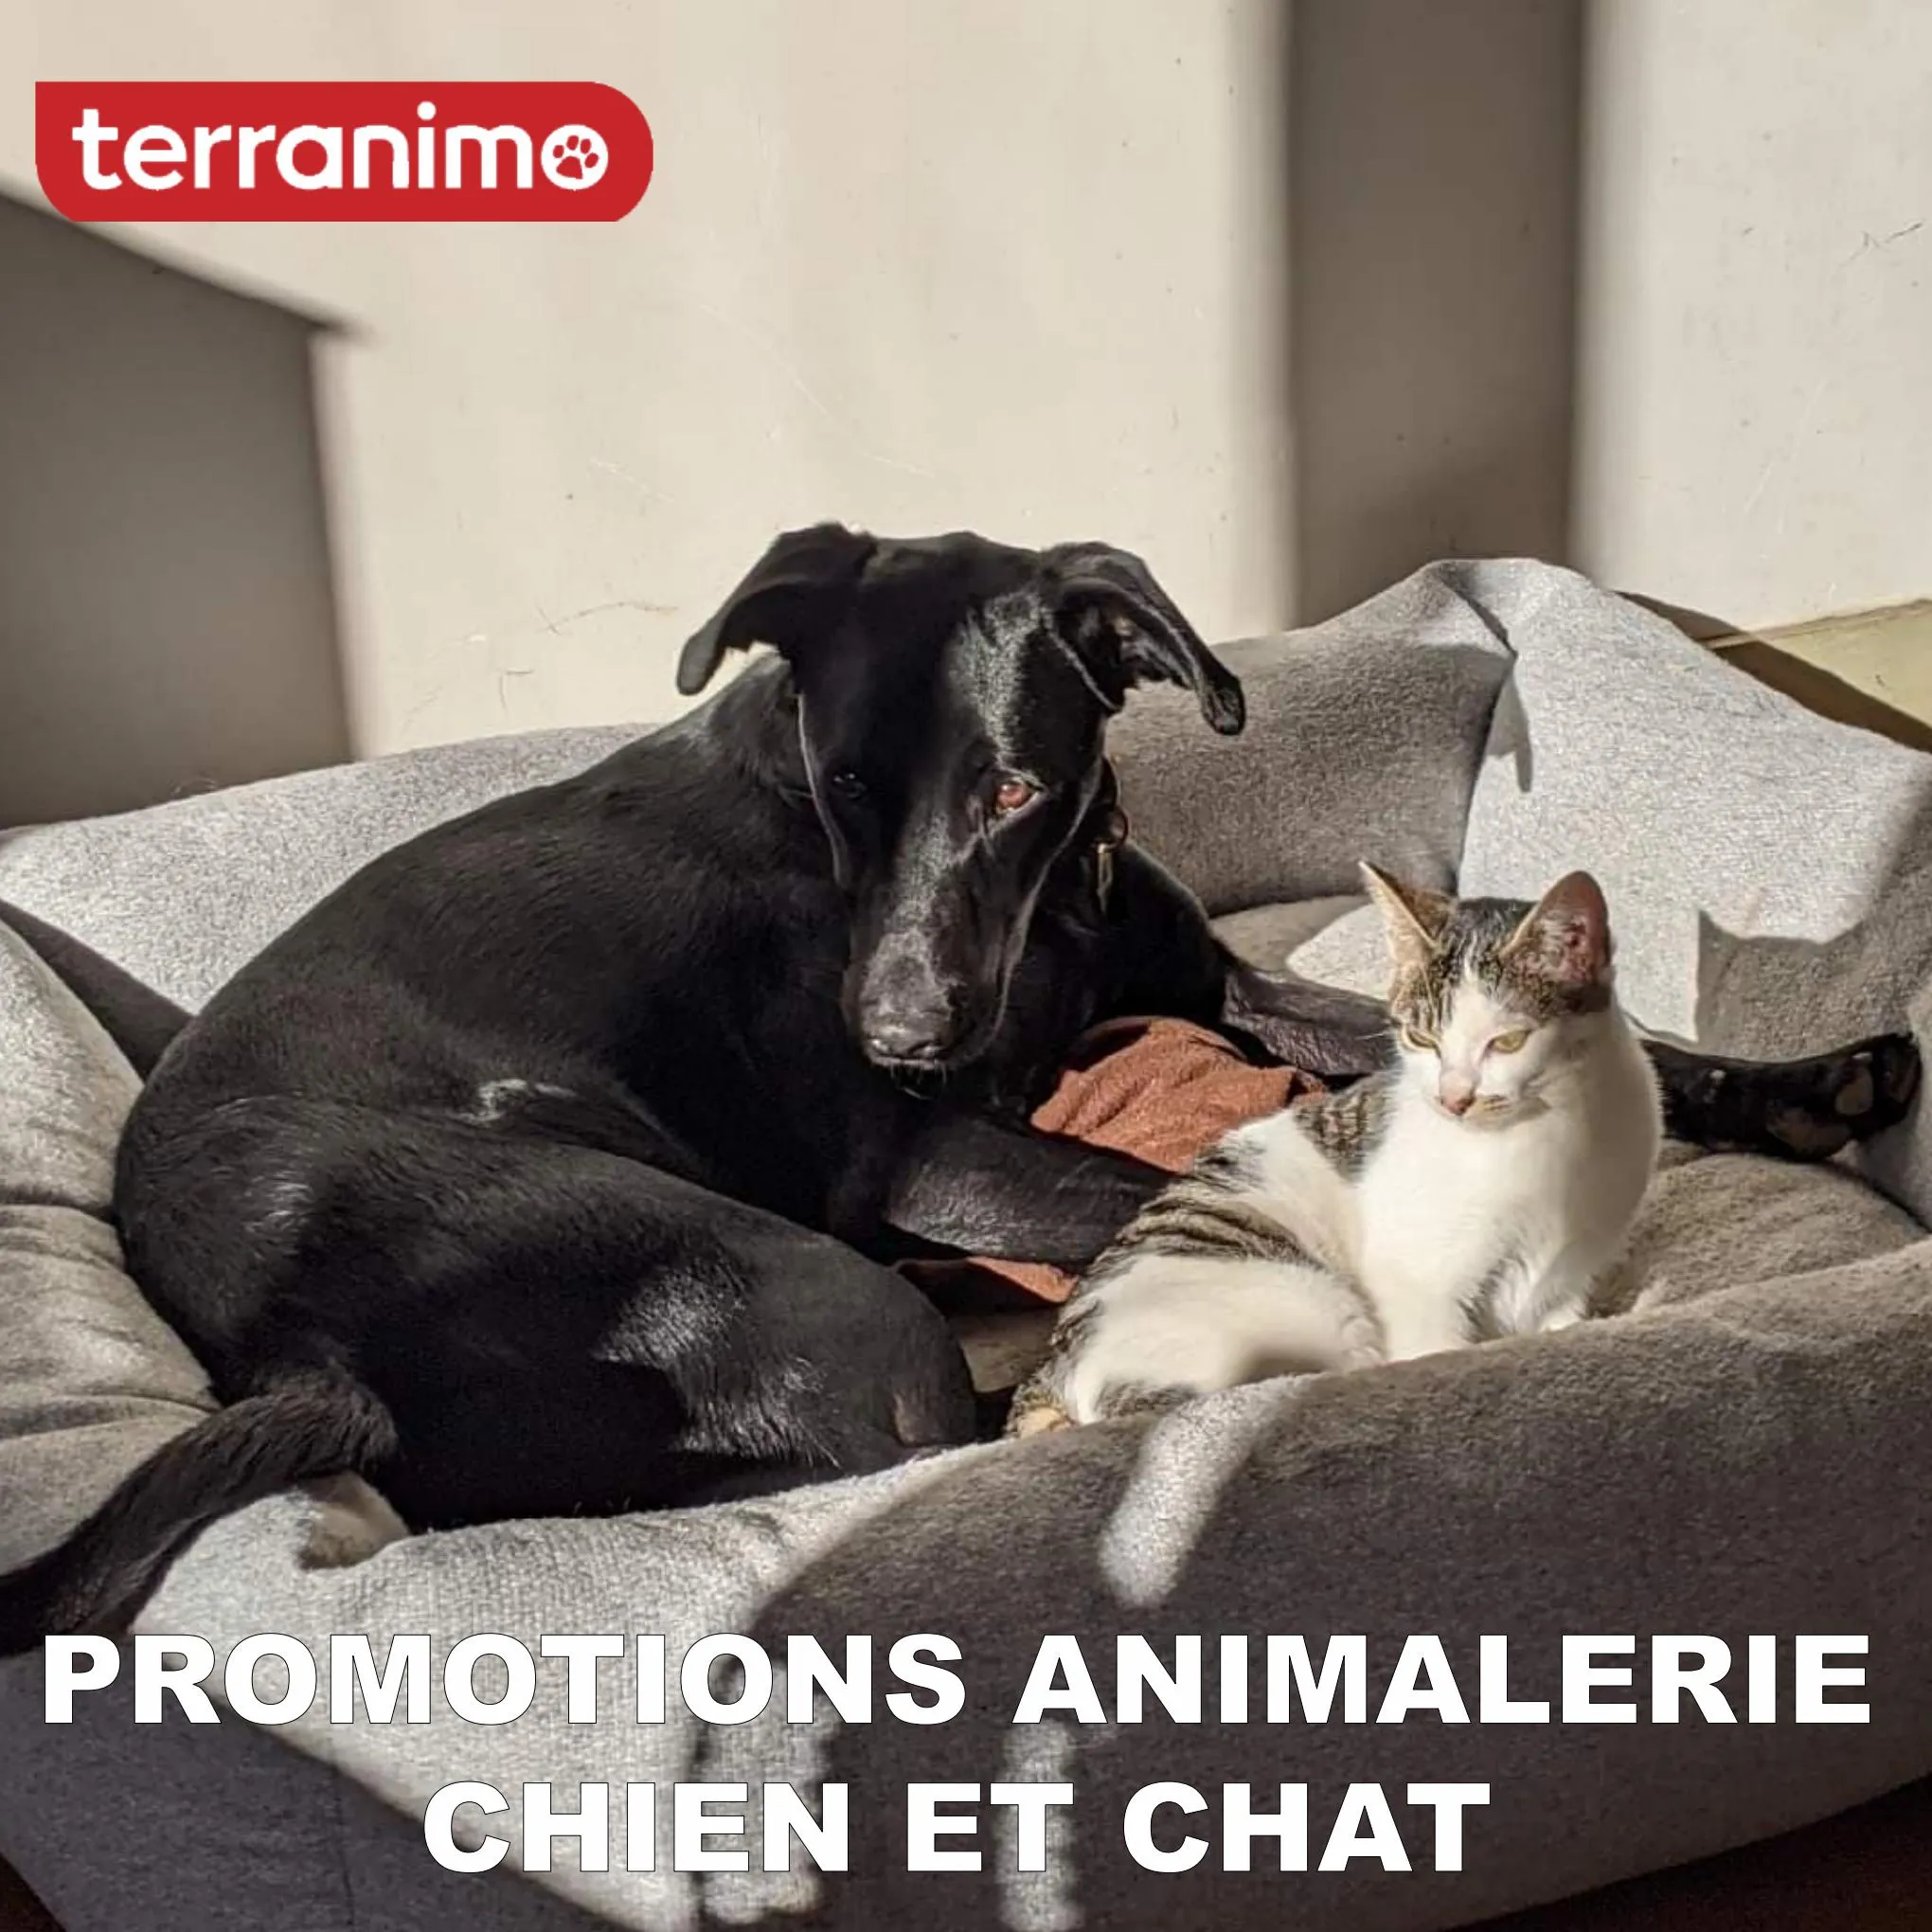 Catalogue Promotions Animalerie chien et chat, page 00001